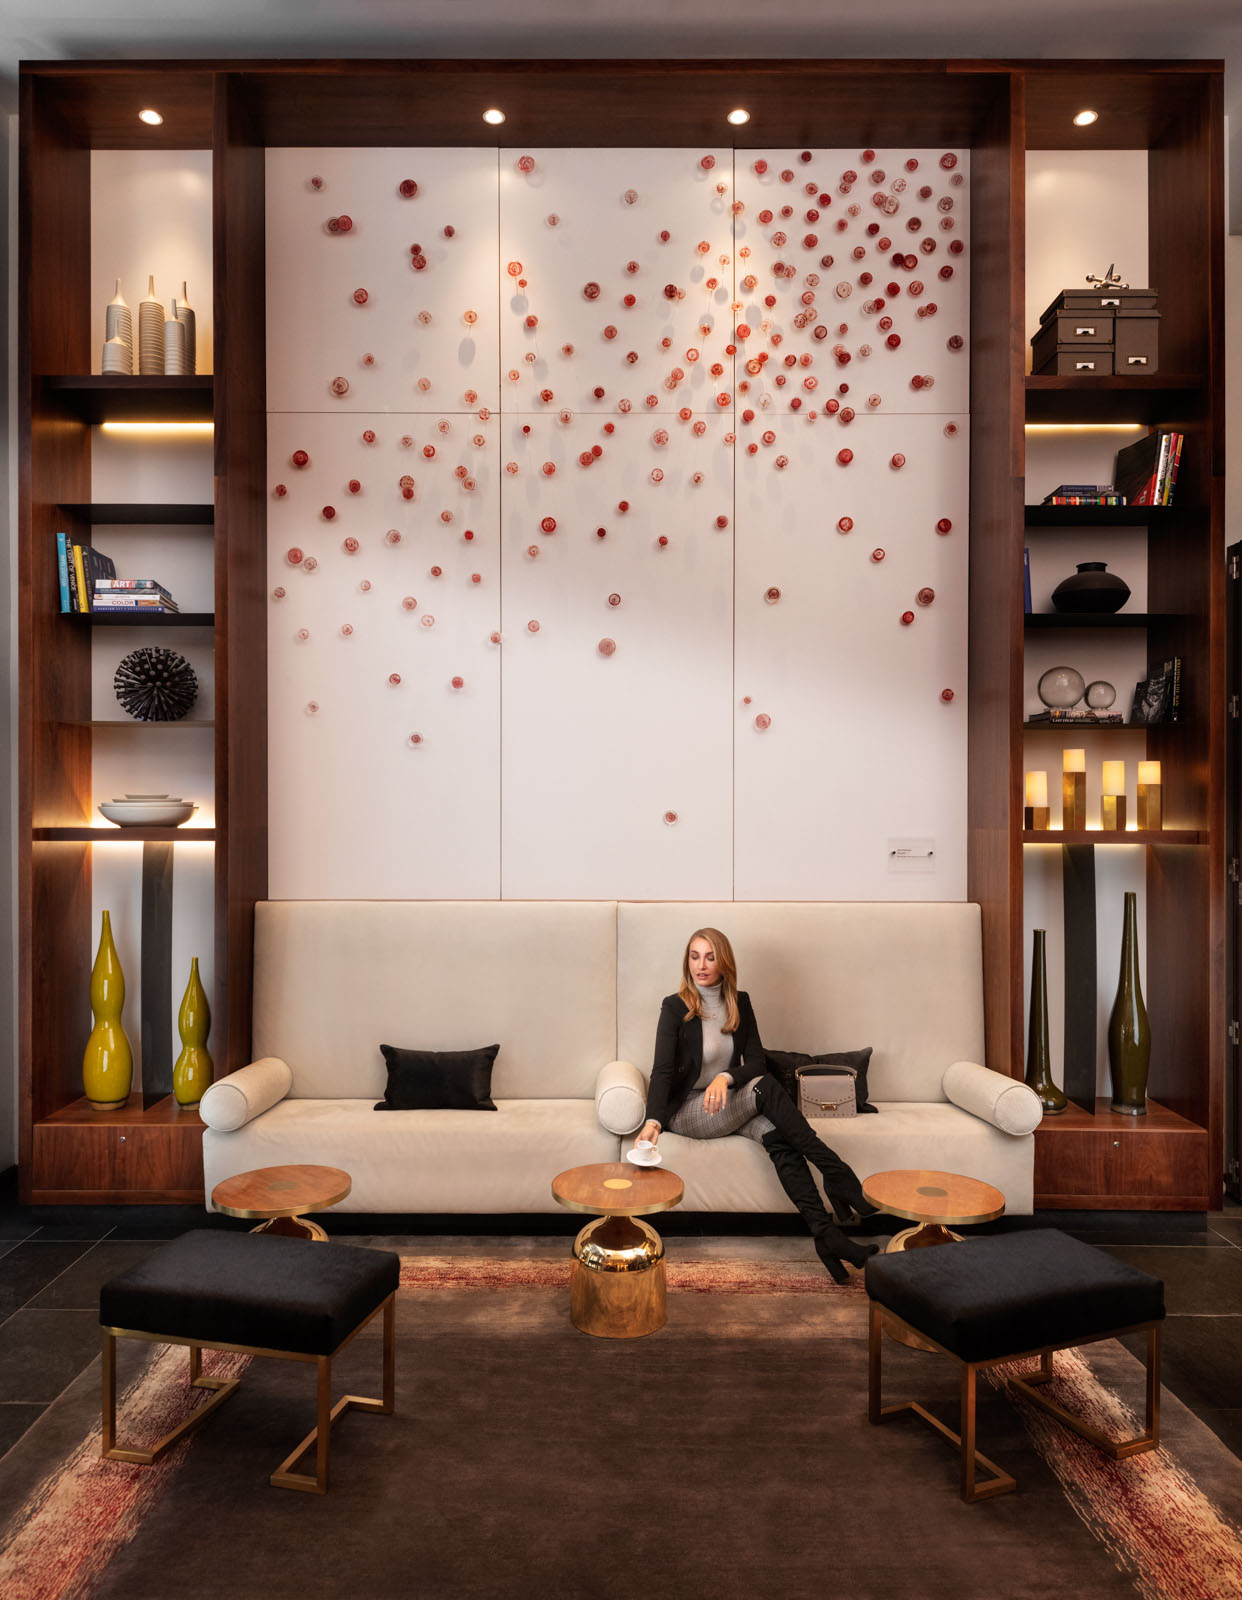 Hotel Cosmopolitan Toronto lobby interior lifestyle architecture with model having coffee